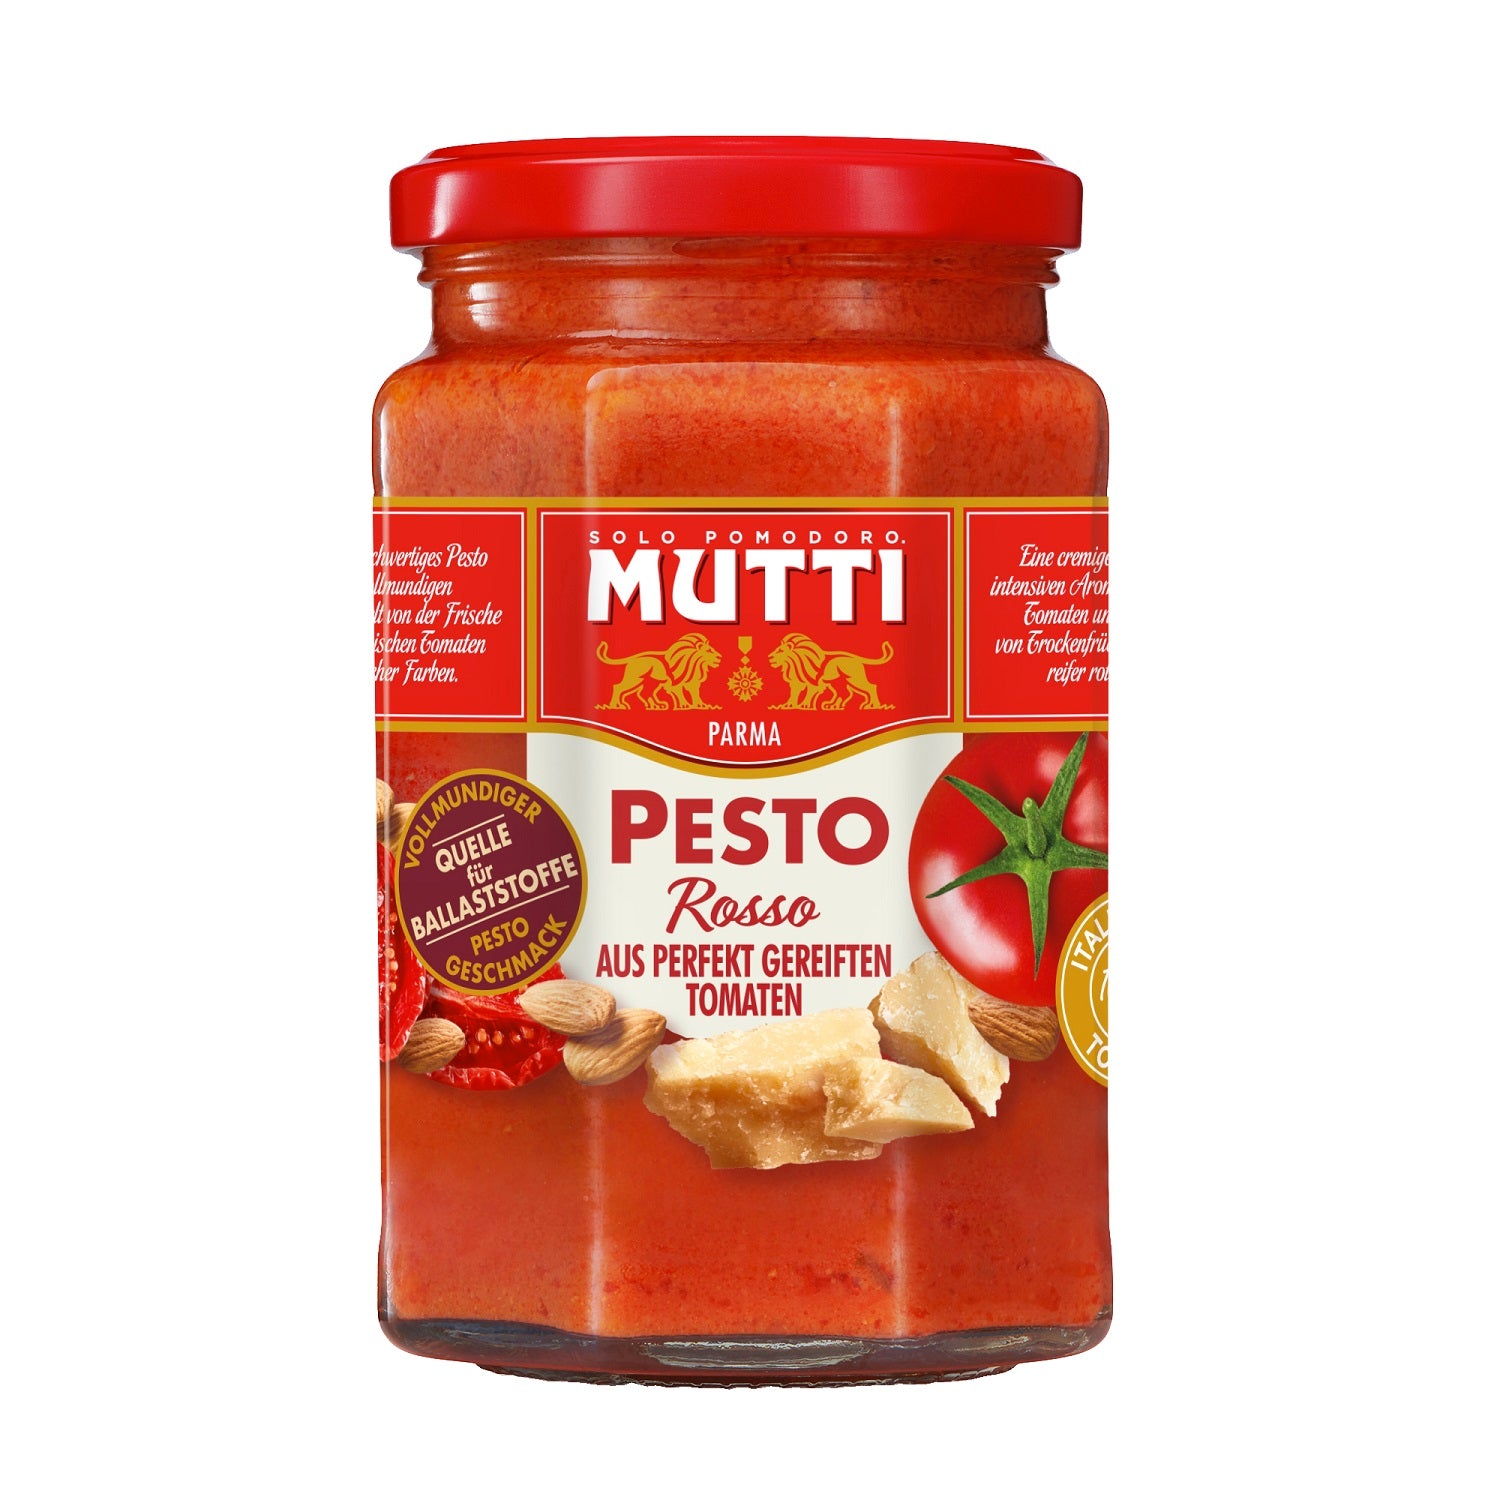 Salsa - Pesto Mutti Rojo - 180 g